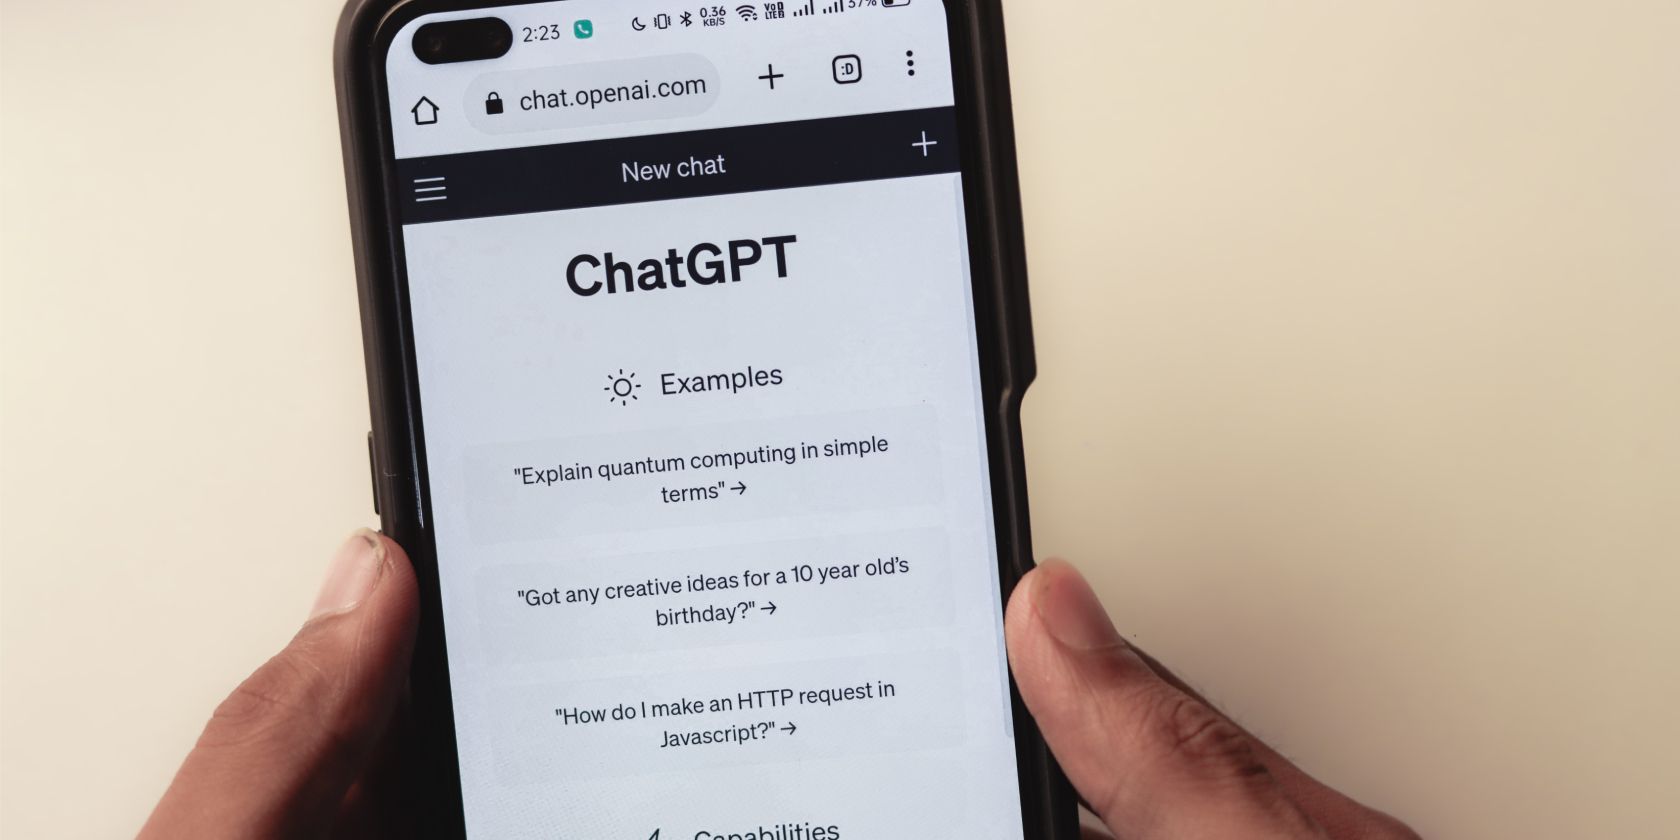 ChatGPT home screen on smartphone